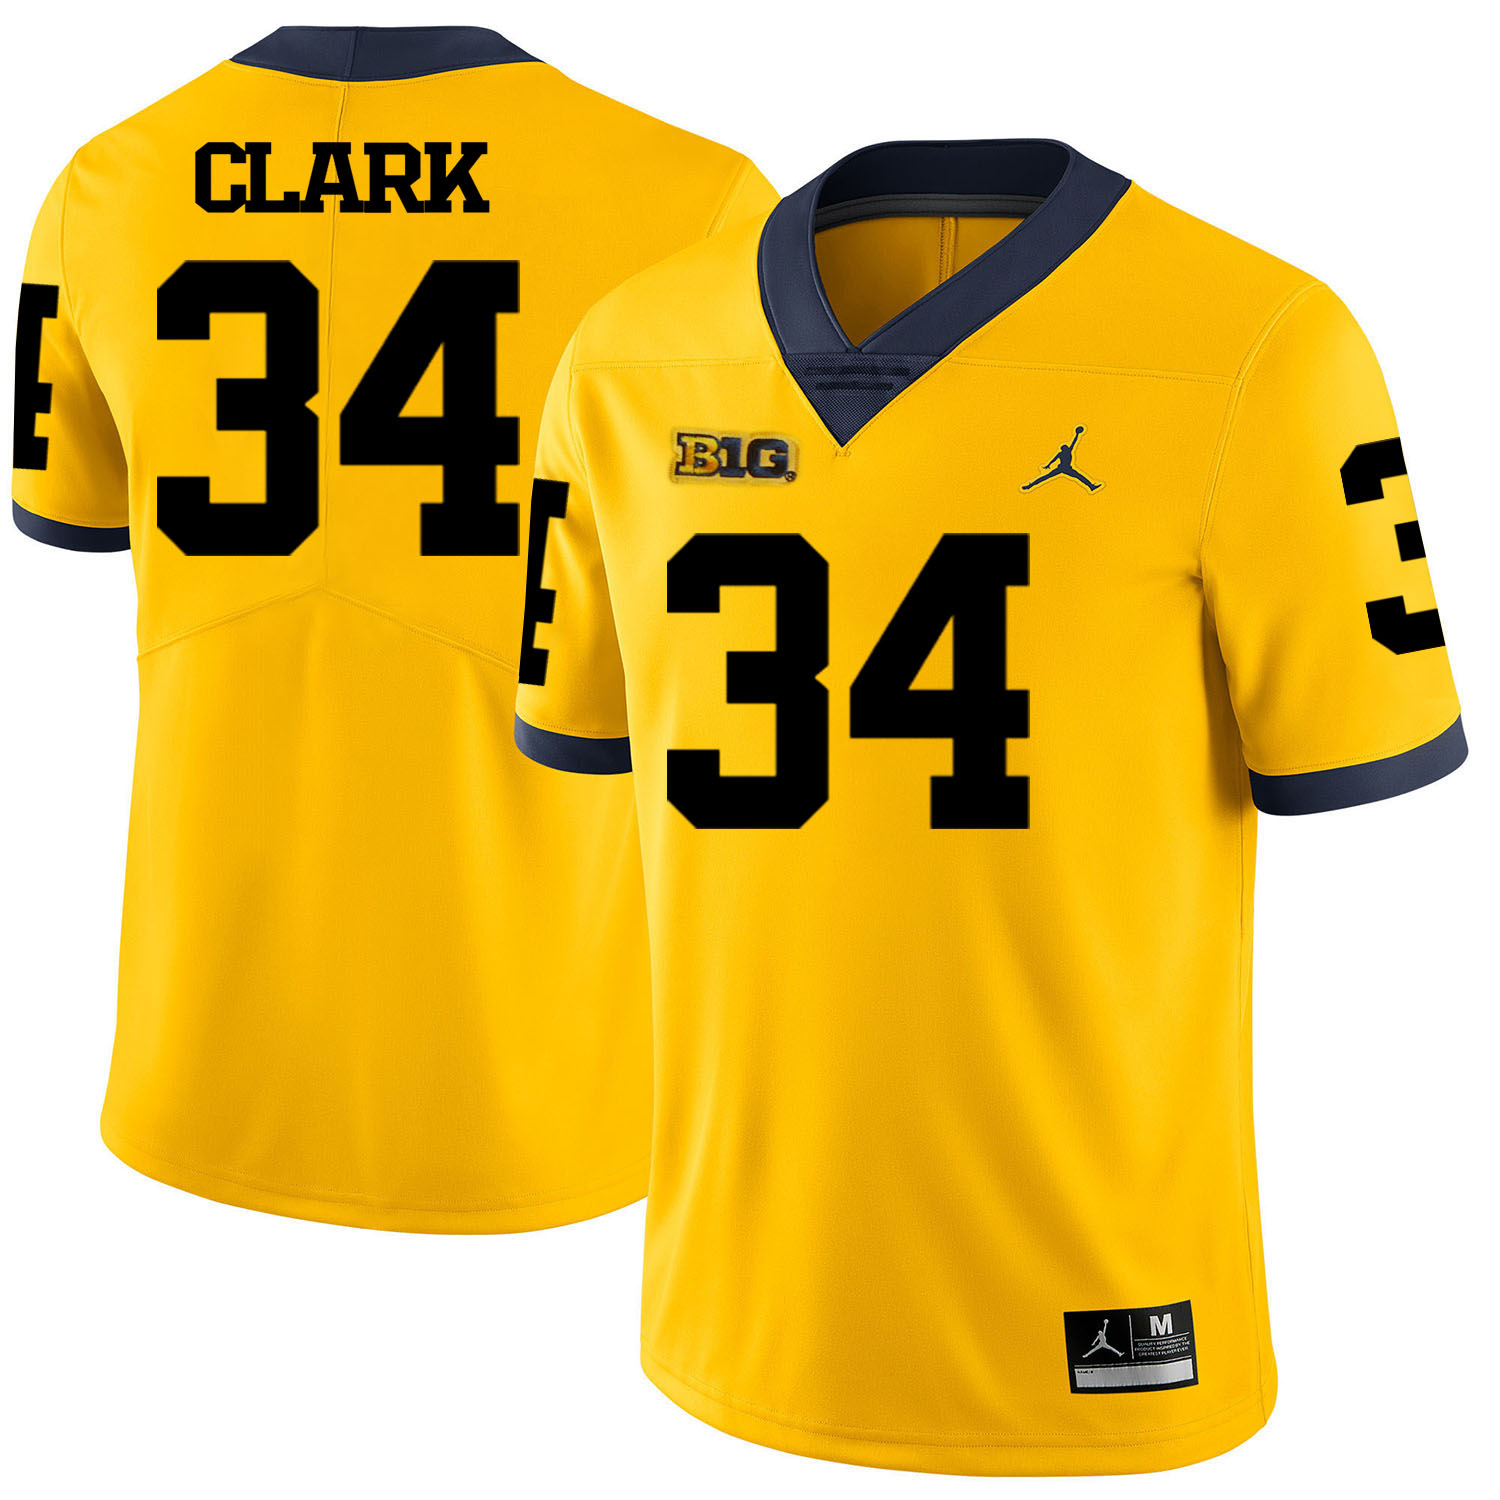 NCAA Michigan Wolverines #34 Clark Yellow Football Jersey